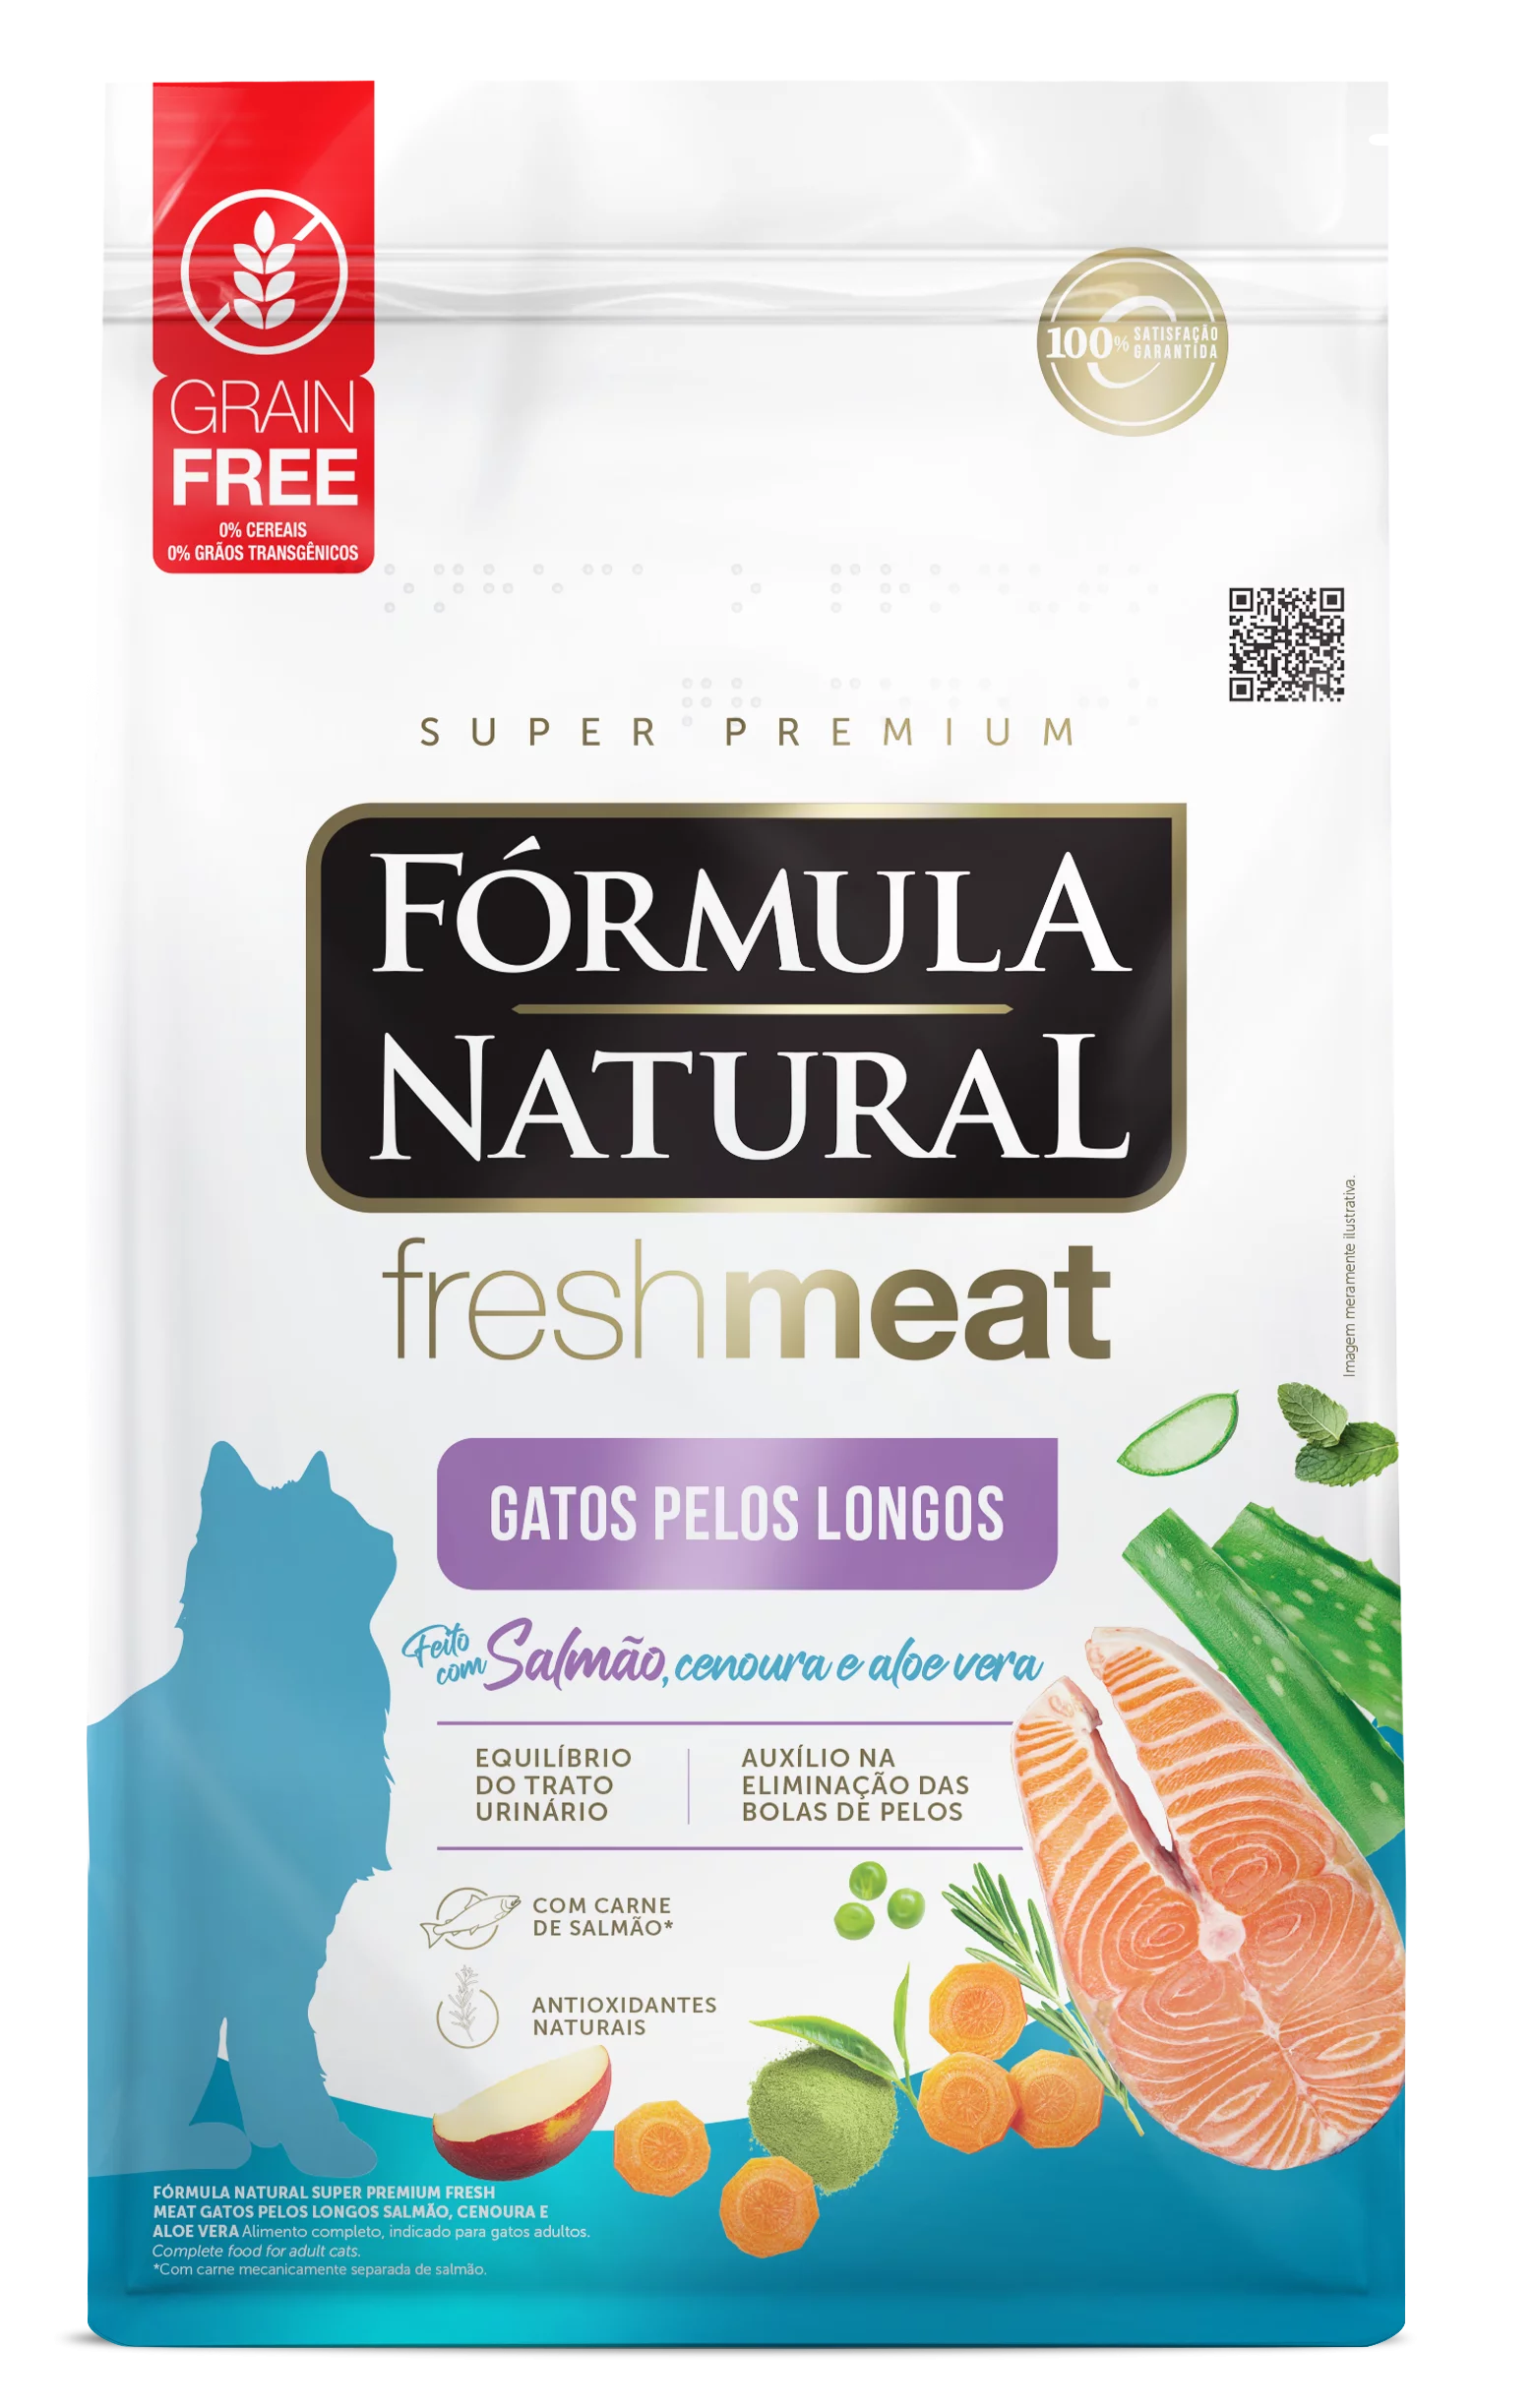 Fórmula Natural Fresh Meat Gatos Pelos Longos